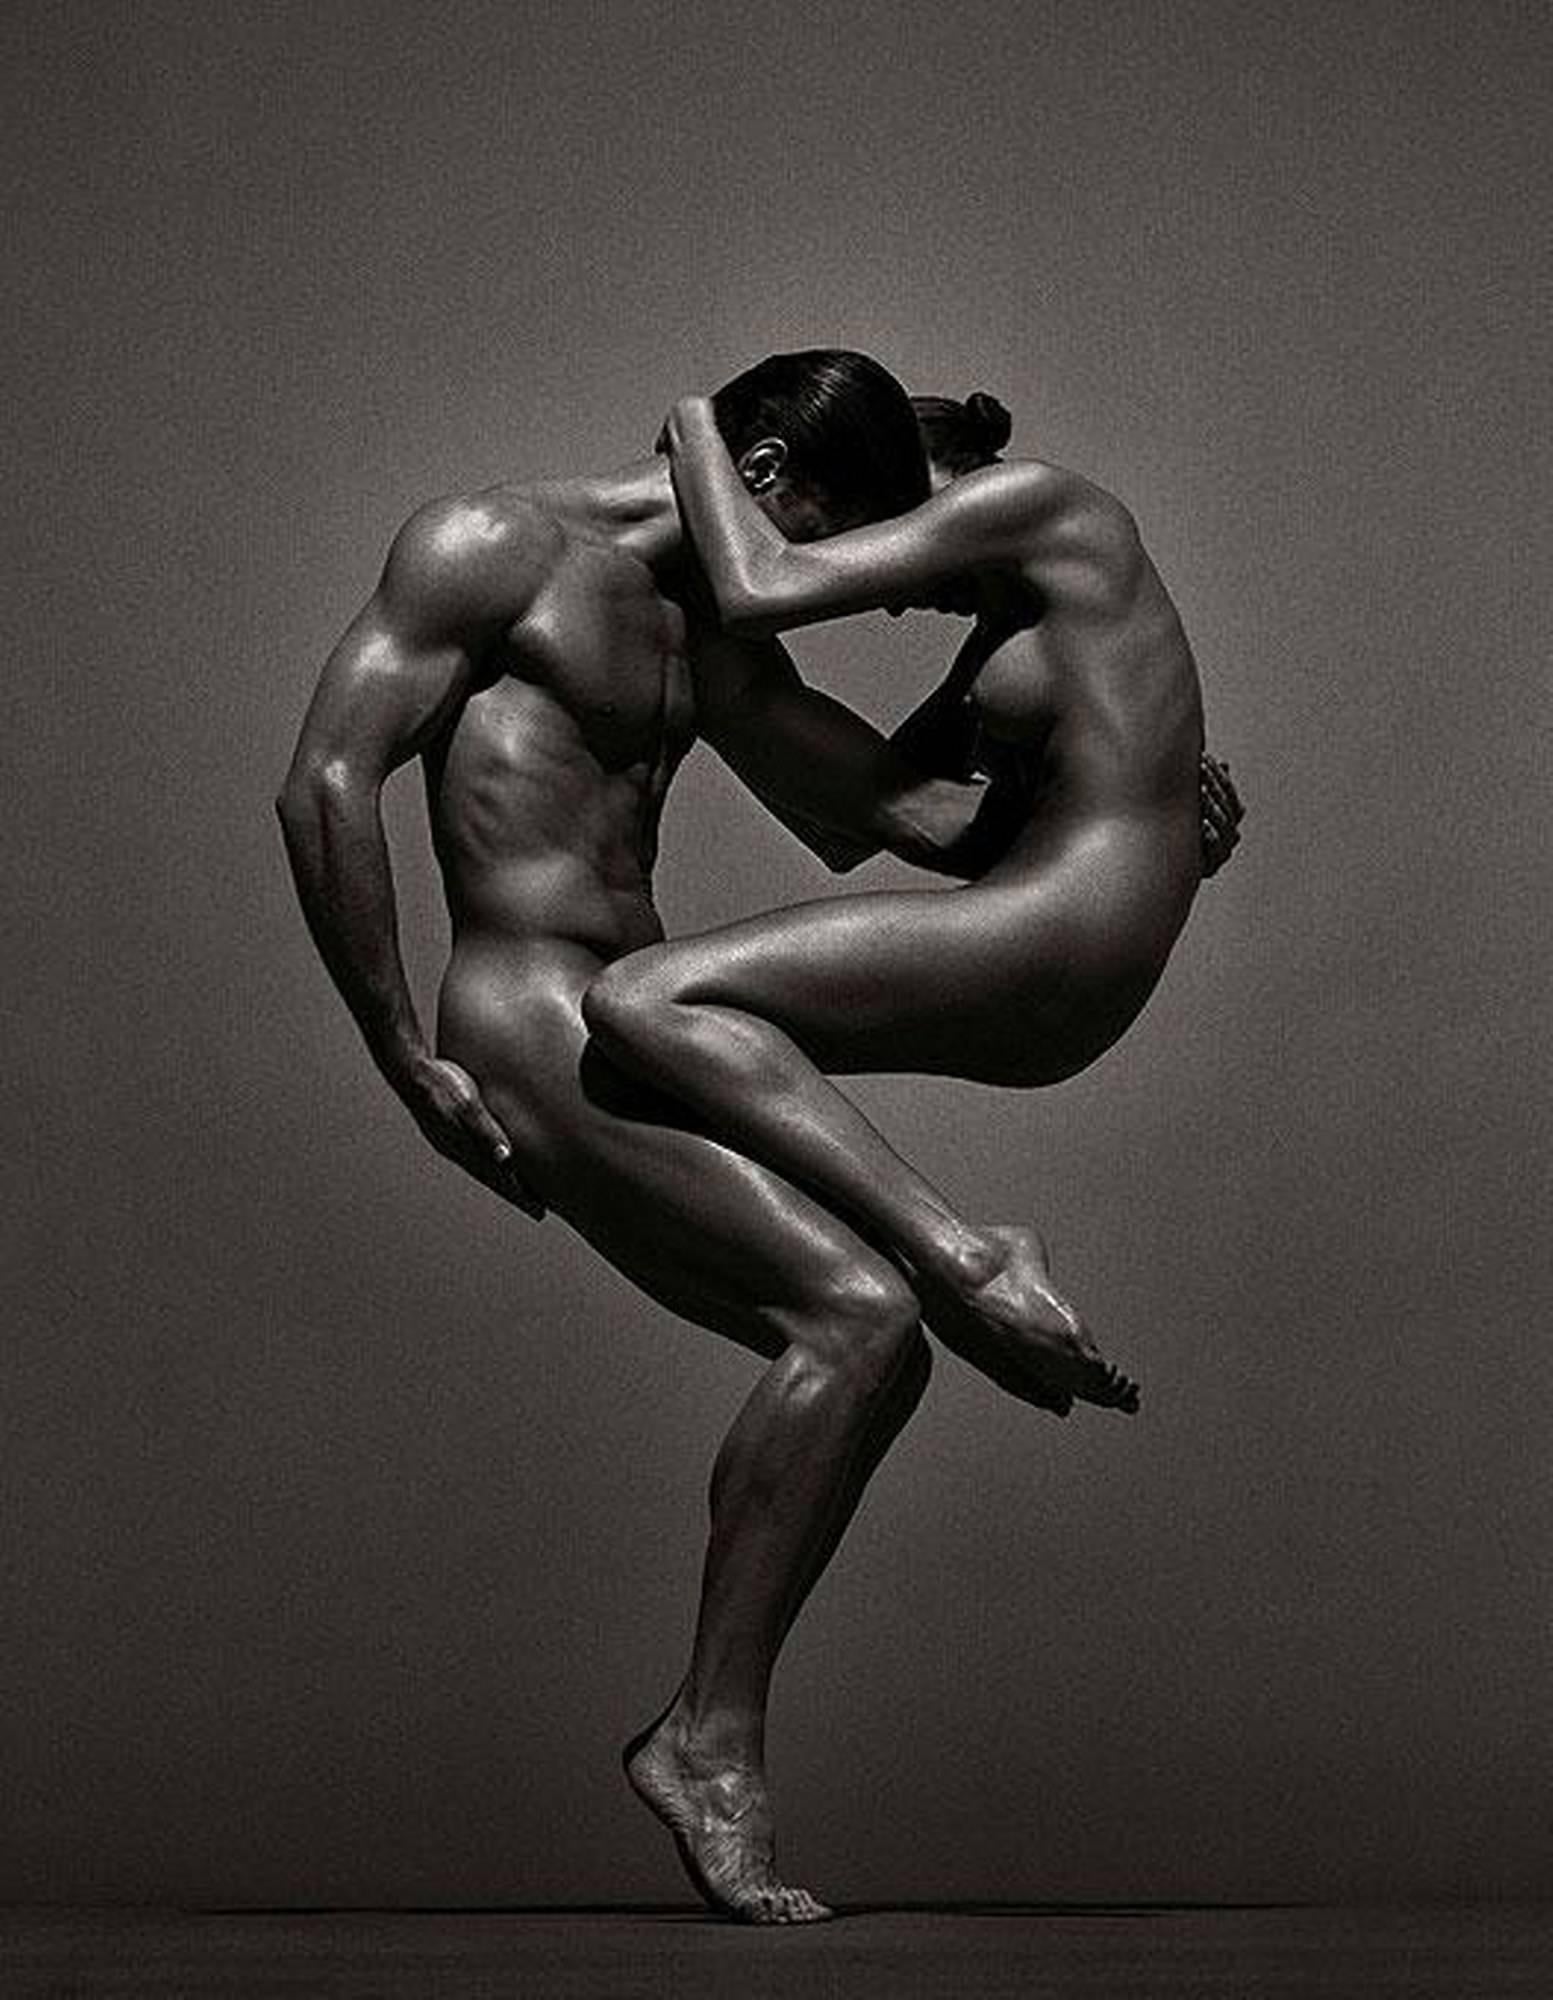 Sina&Anthony, Wien - Doppelakt in sportlicher Pose, Kunstfotografie, 1995